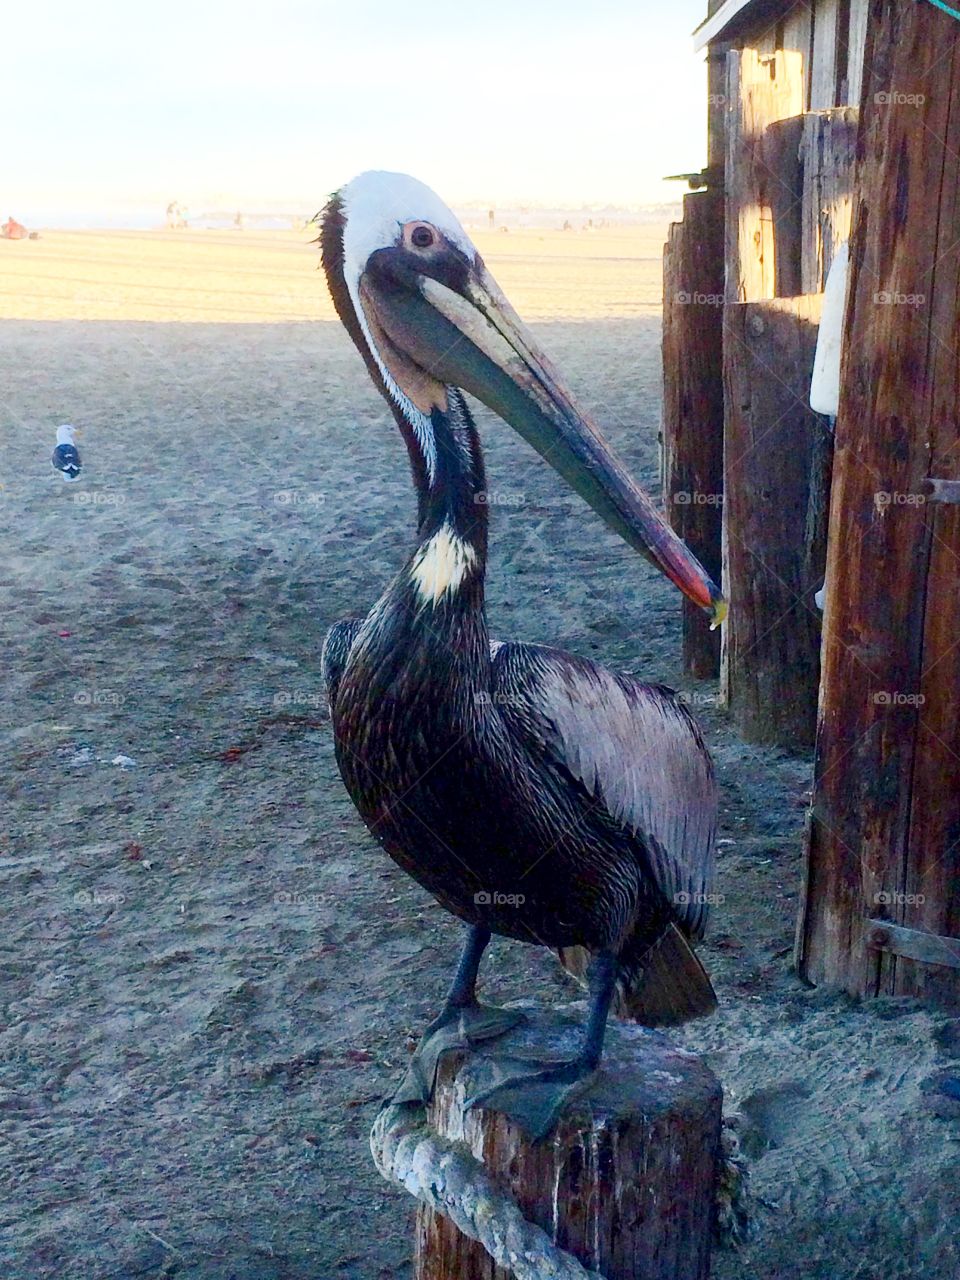 Strke a pose. Pelican posing at sunrise